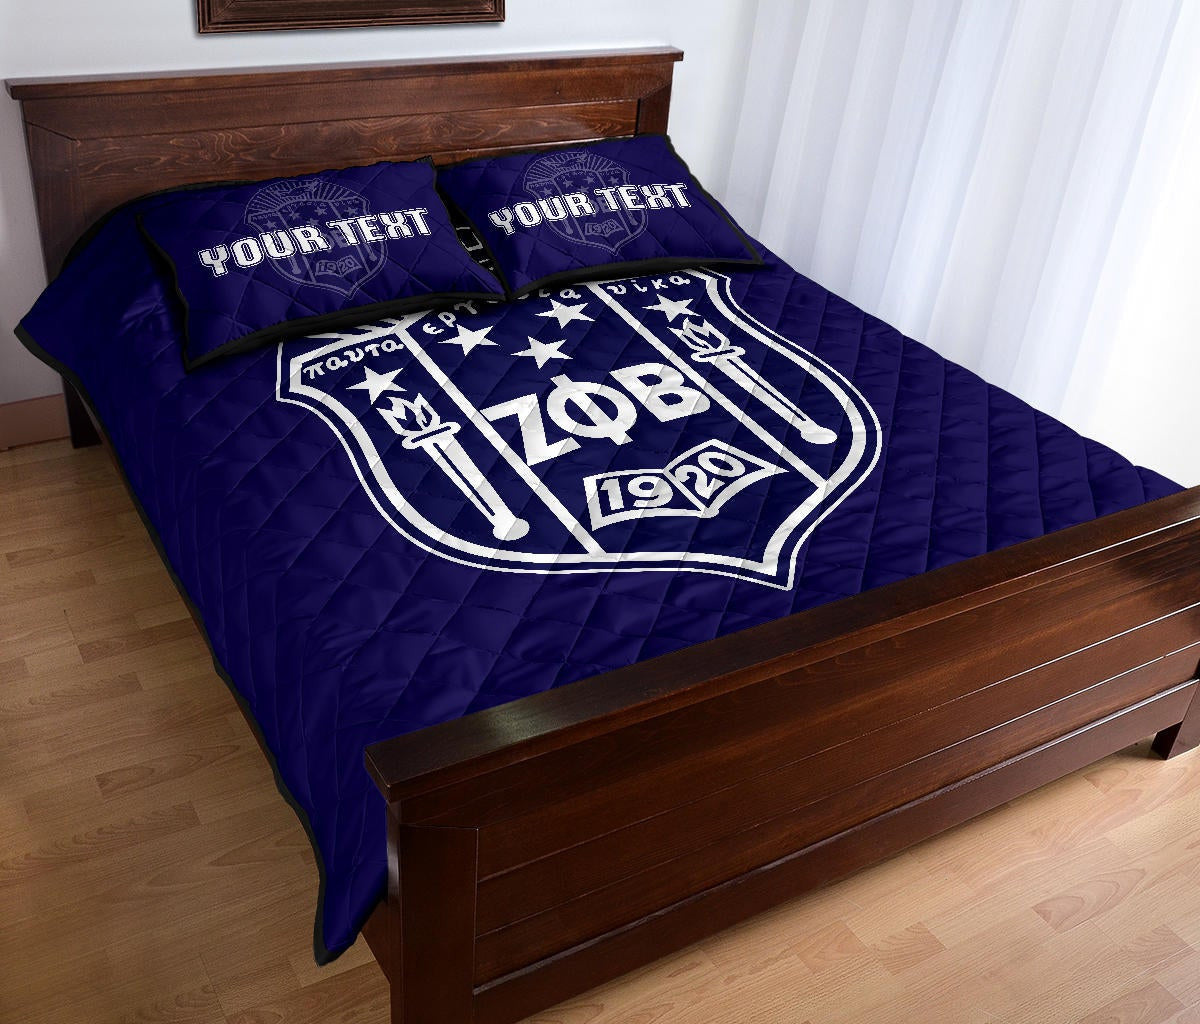 Tothetopcloset Home Set - Personalized Zeta Phi Beta Quilt Bed Set Classic J1